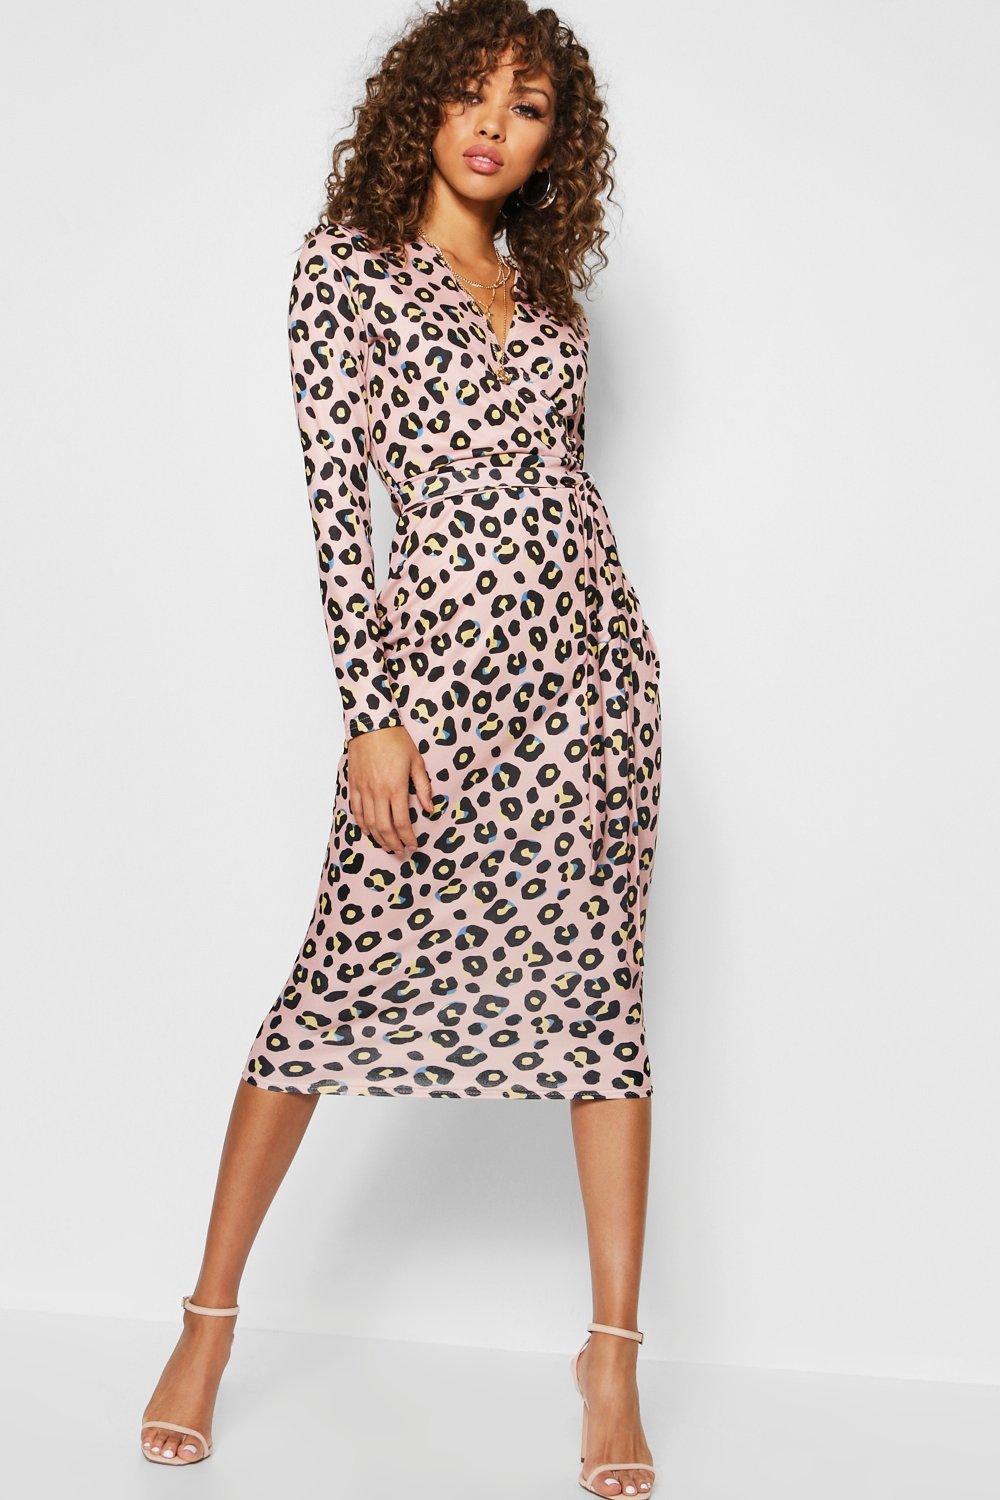 Leopard Print Wrap Collared Dress Midi | Boohoo